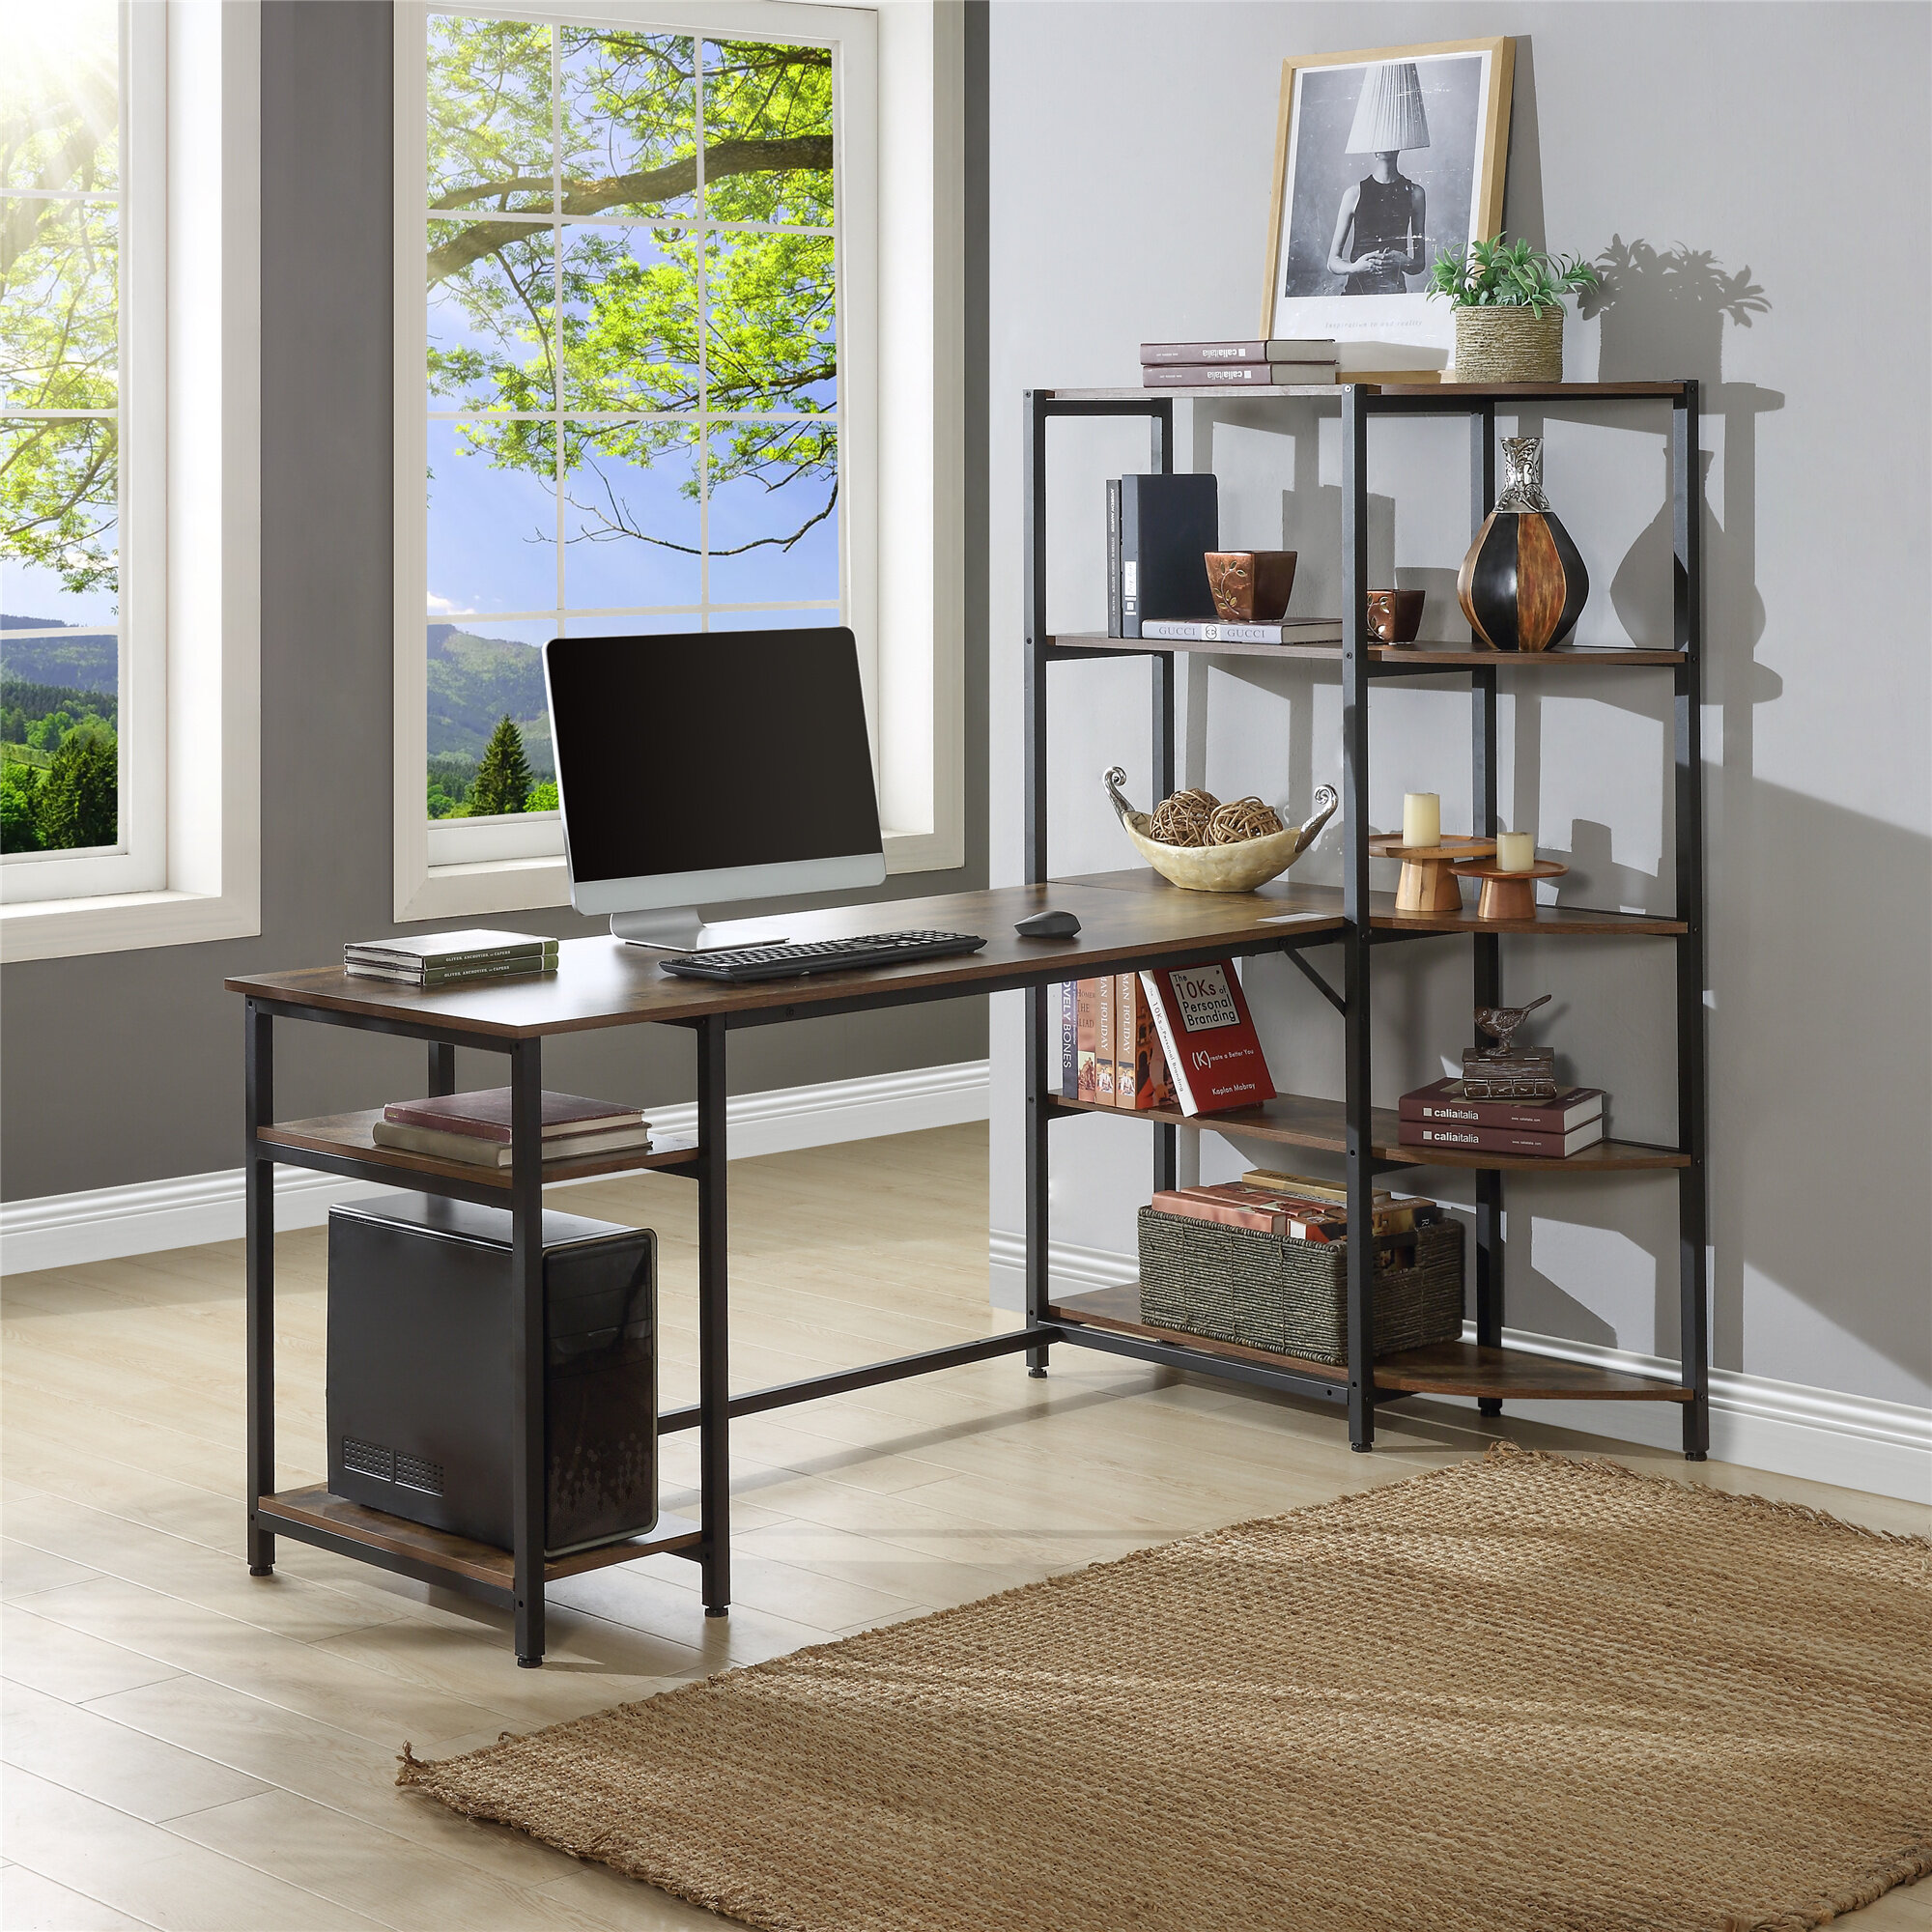 Home Computer Desk 3-Tier Book Shelf Desk PC Workstation Study Writing Table 